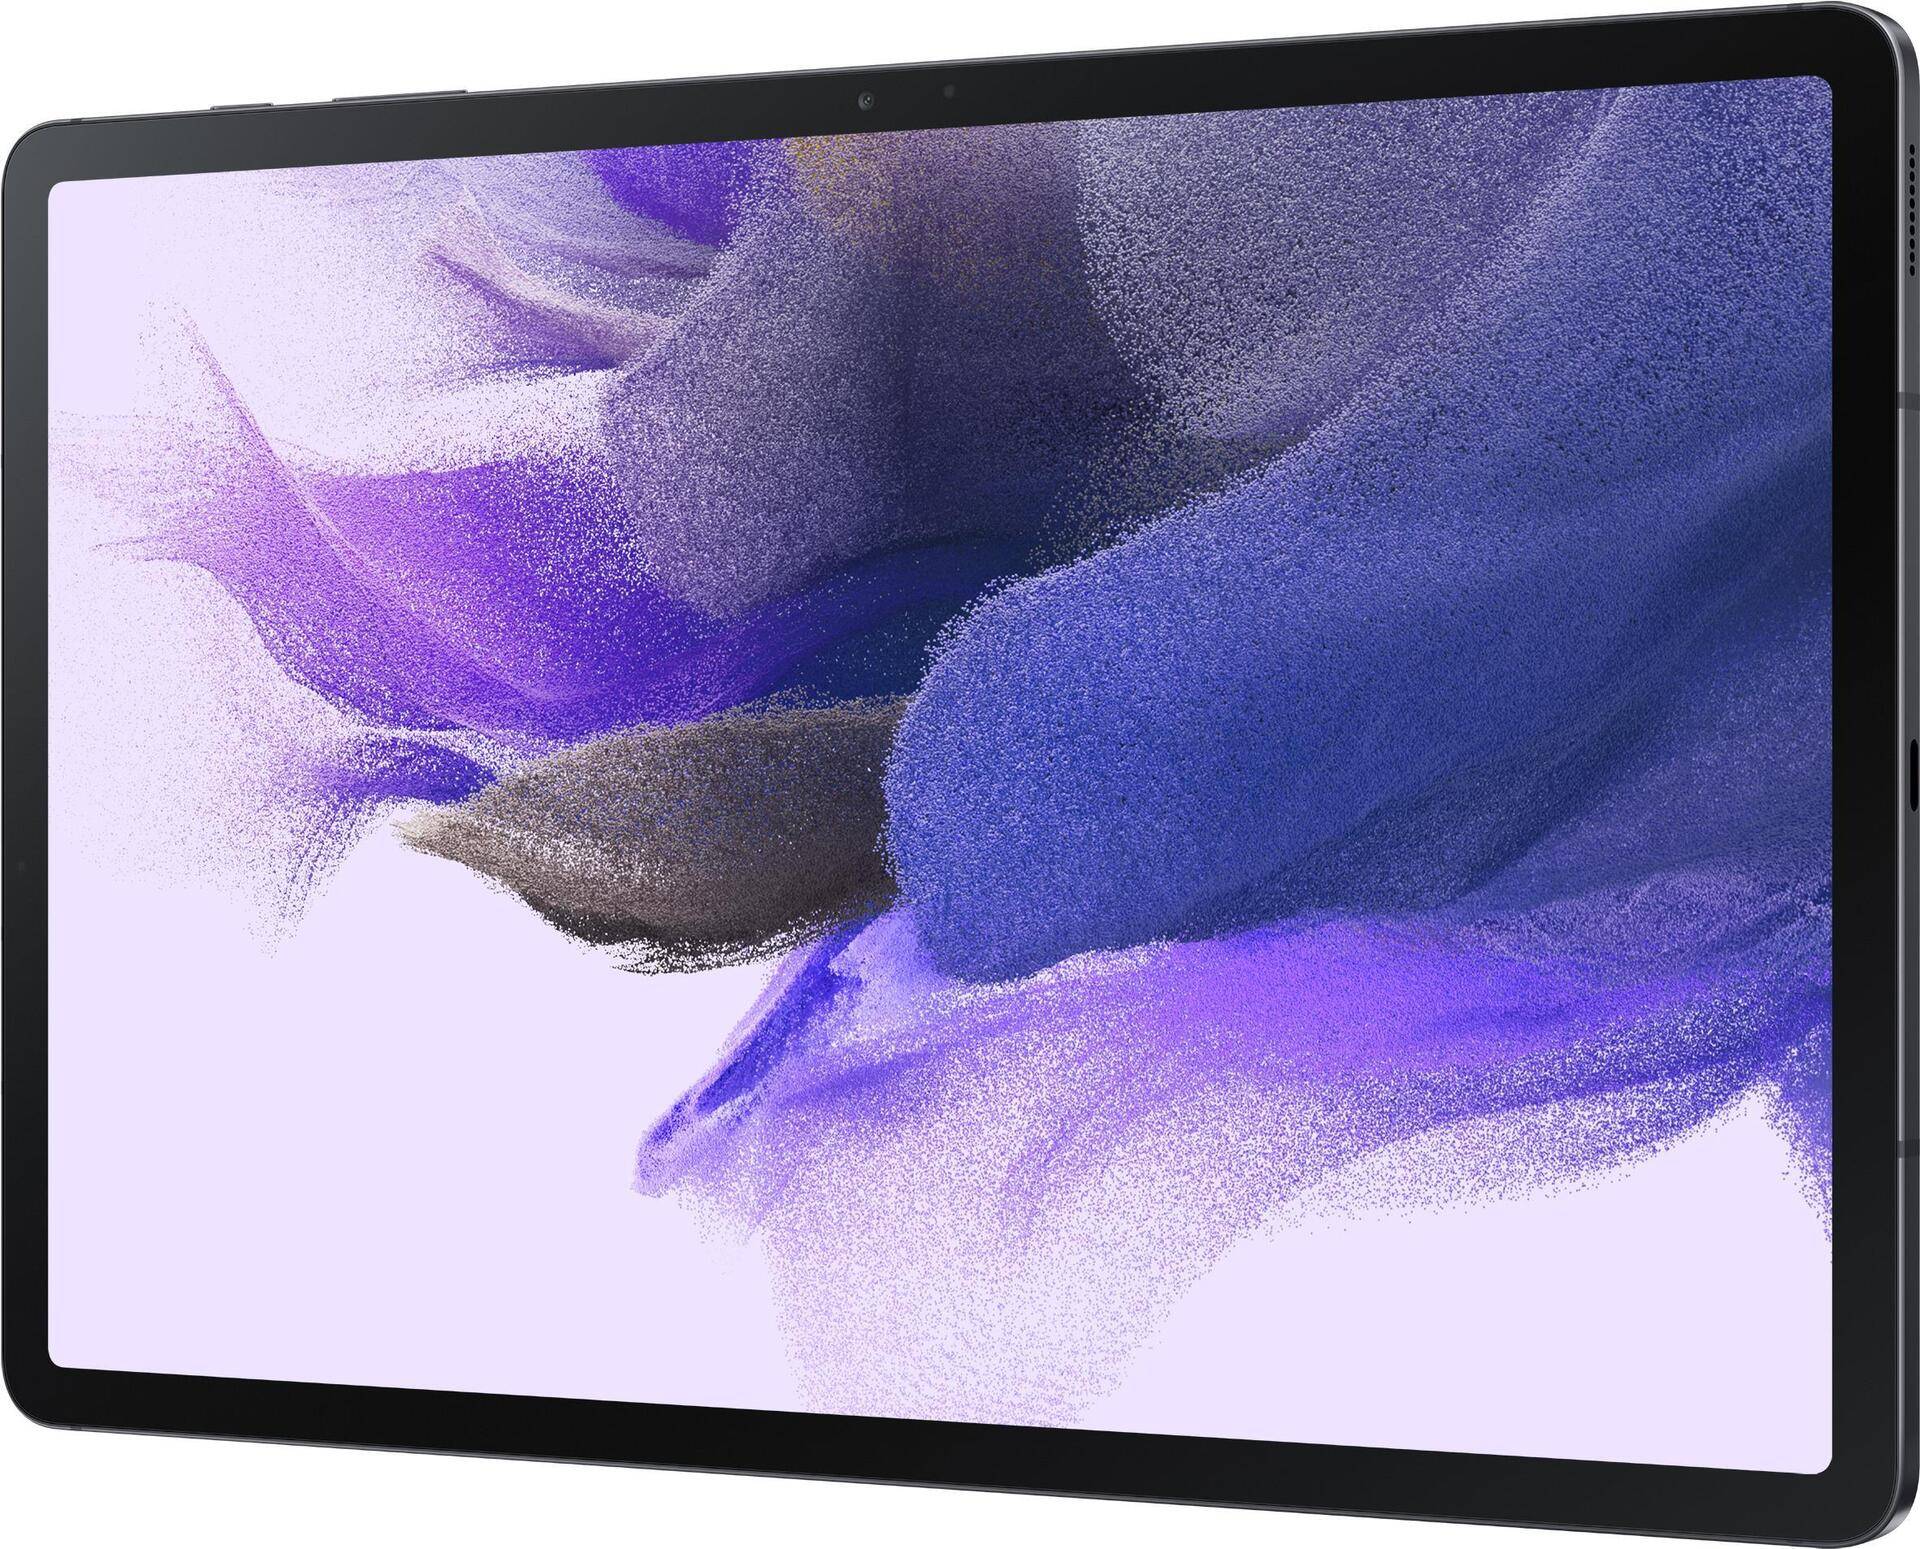 Samsung Galaxy Tab S7 FE - Tablet - Android - 64 GB - 31.5 cm (12.4) TFT (2560 x 1600) - microSD-Steckplatz - 3G, 4G, 5G - Mystic Black von Samsung